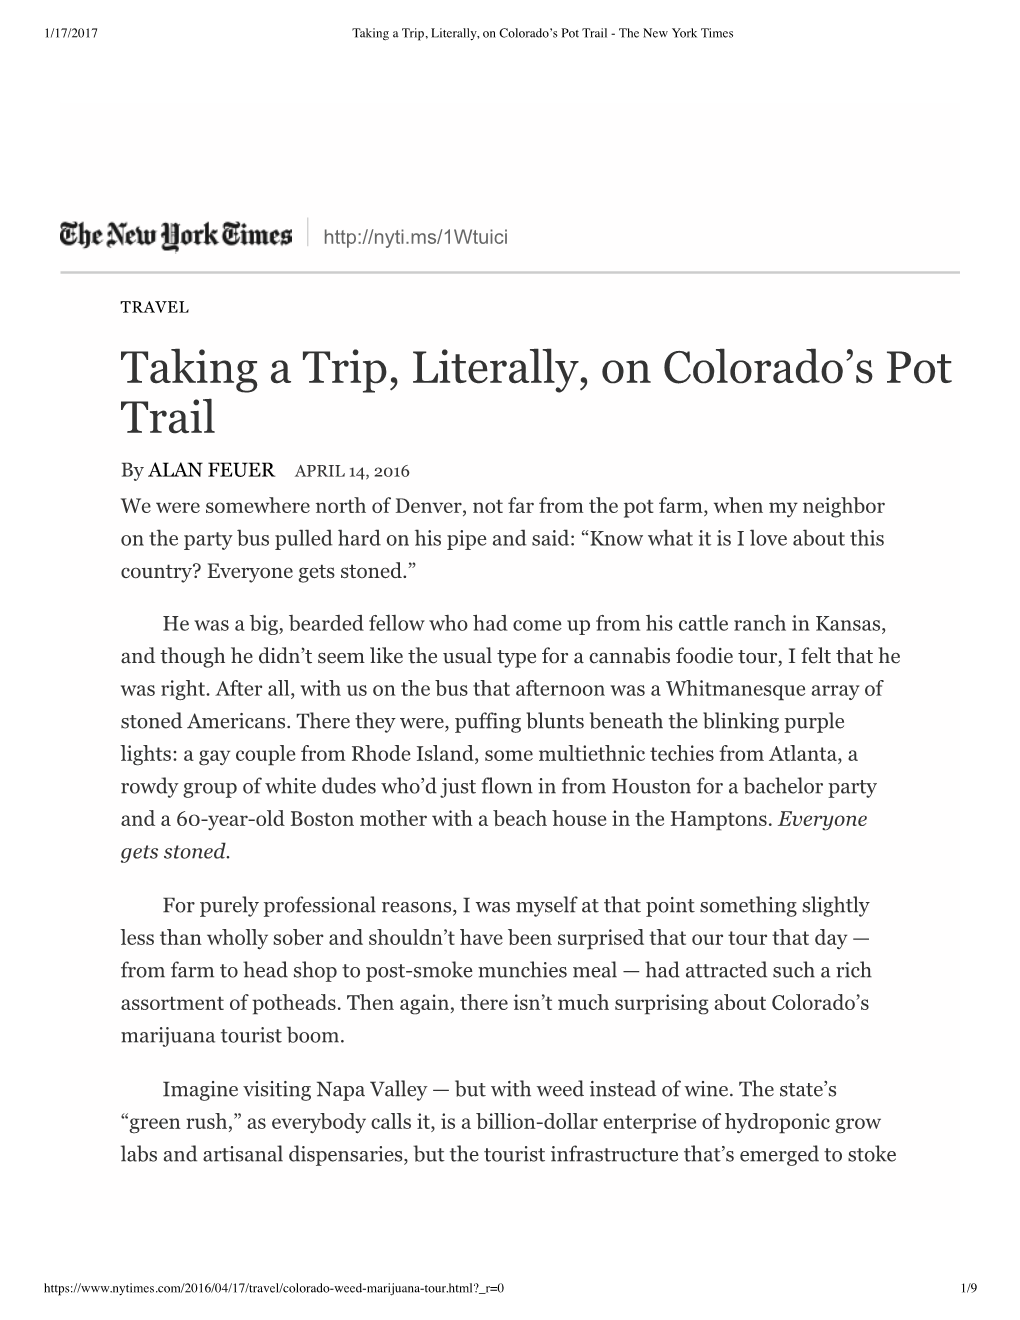 Taking a Trip, Literally, on Colorado's Pot Trail